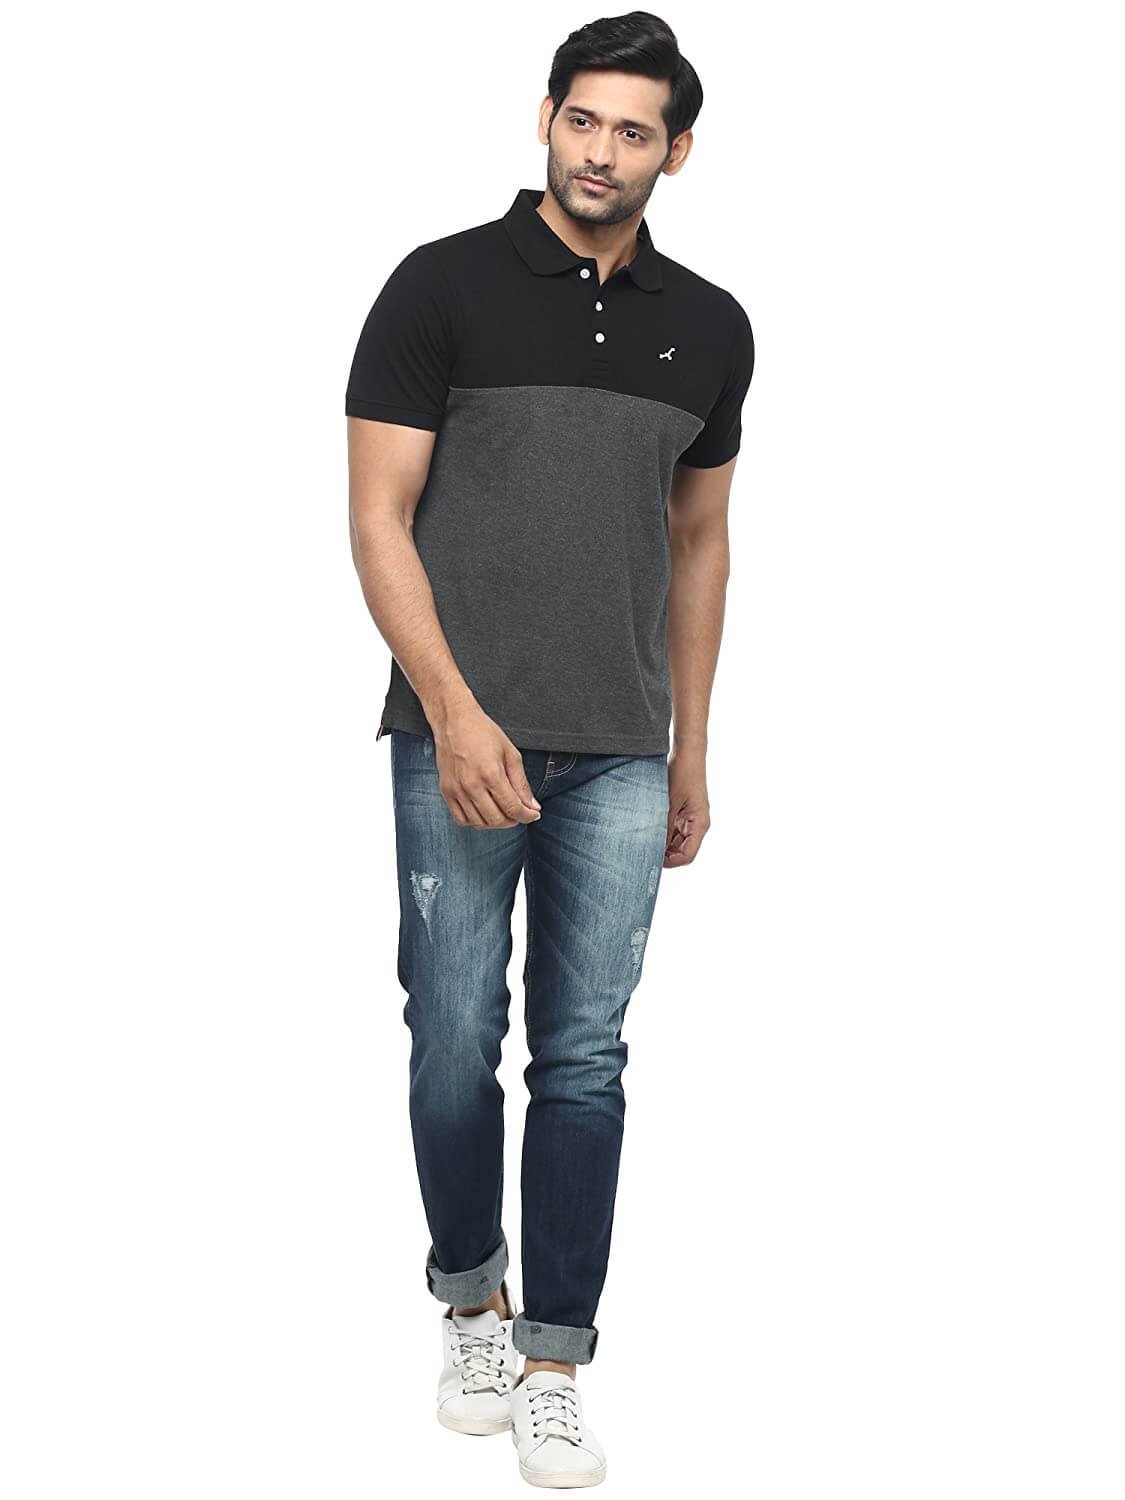 https://shoppingyatra.com/product_images/AMERICAN CREW Men's Regular Fit Polos1.jpg